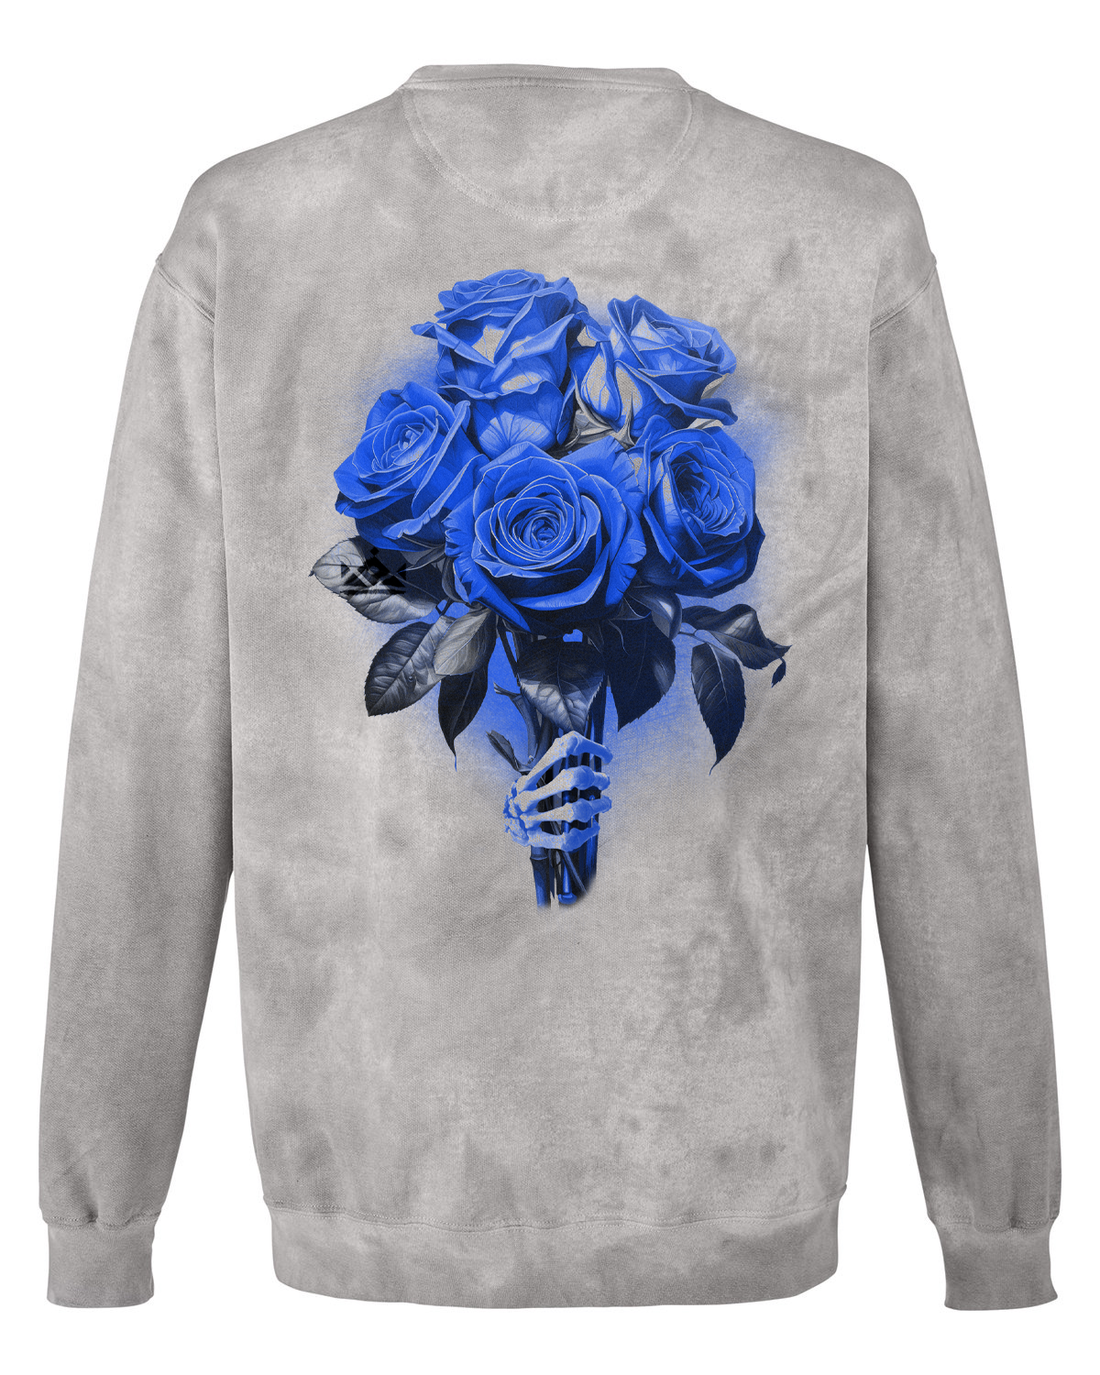 Concrete Roses Sweater